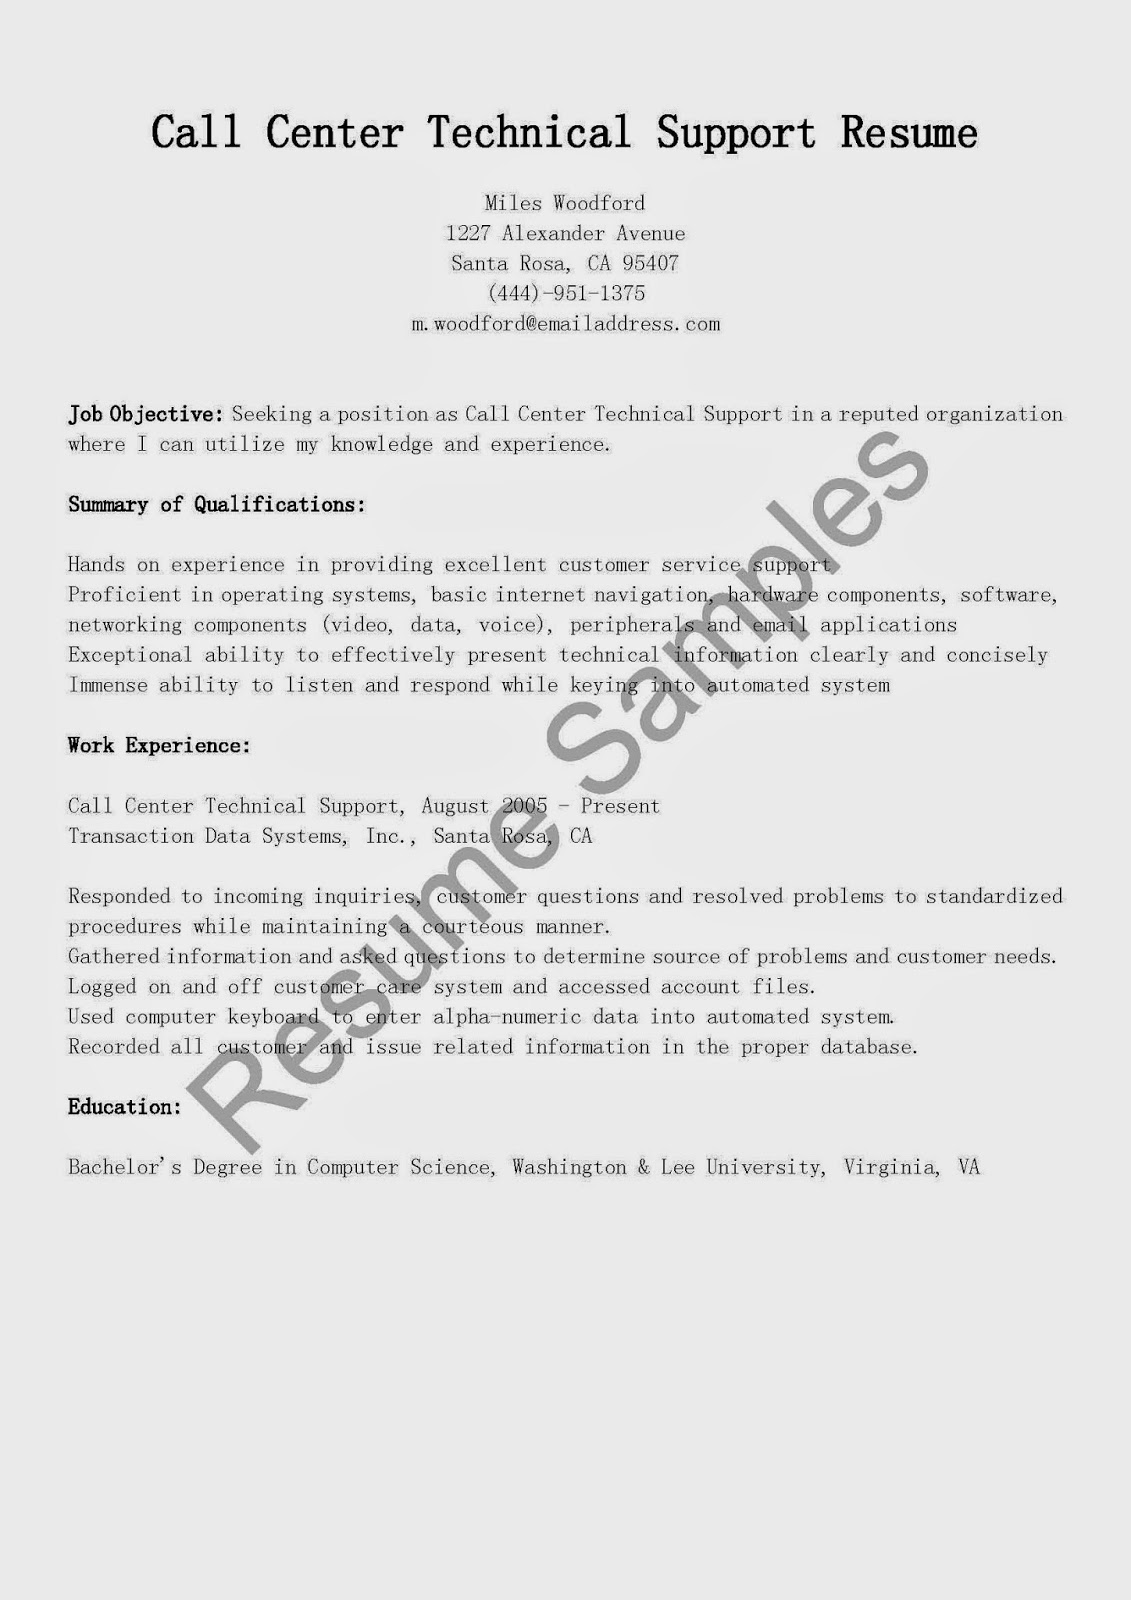 Sample resume masters thesis